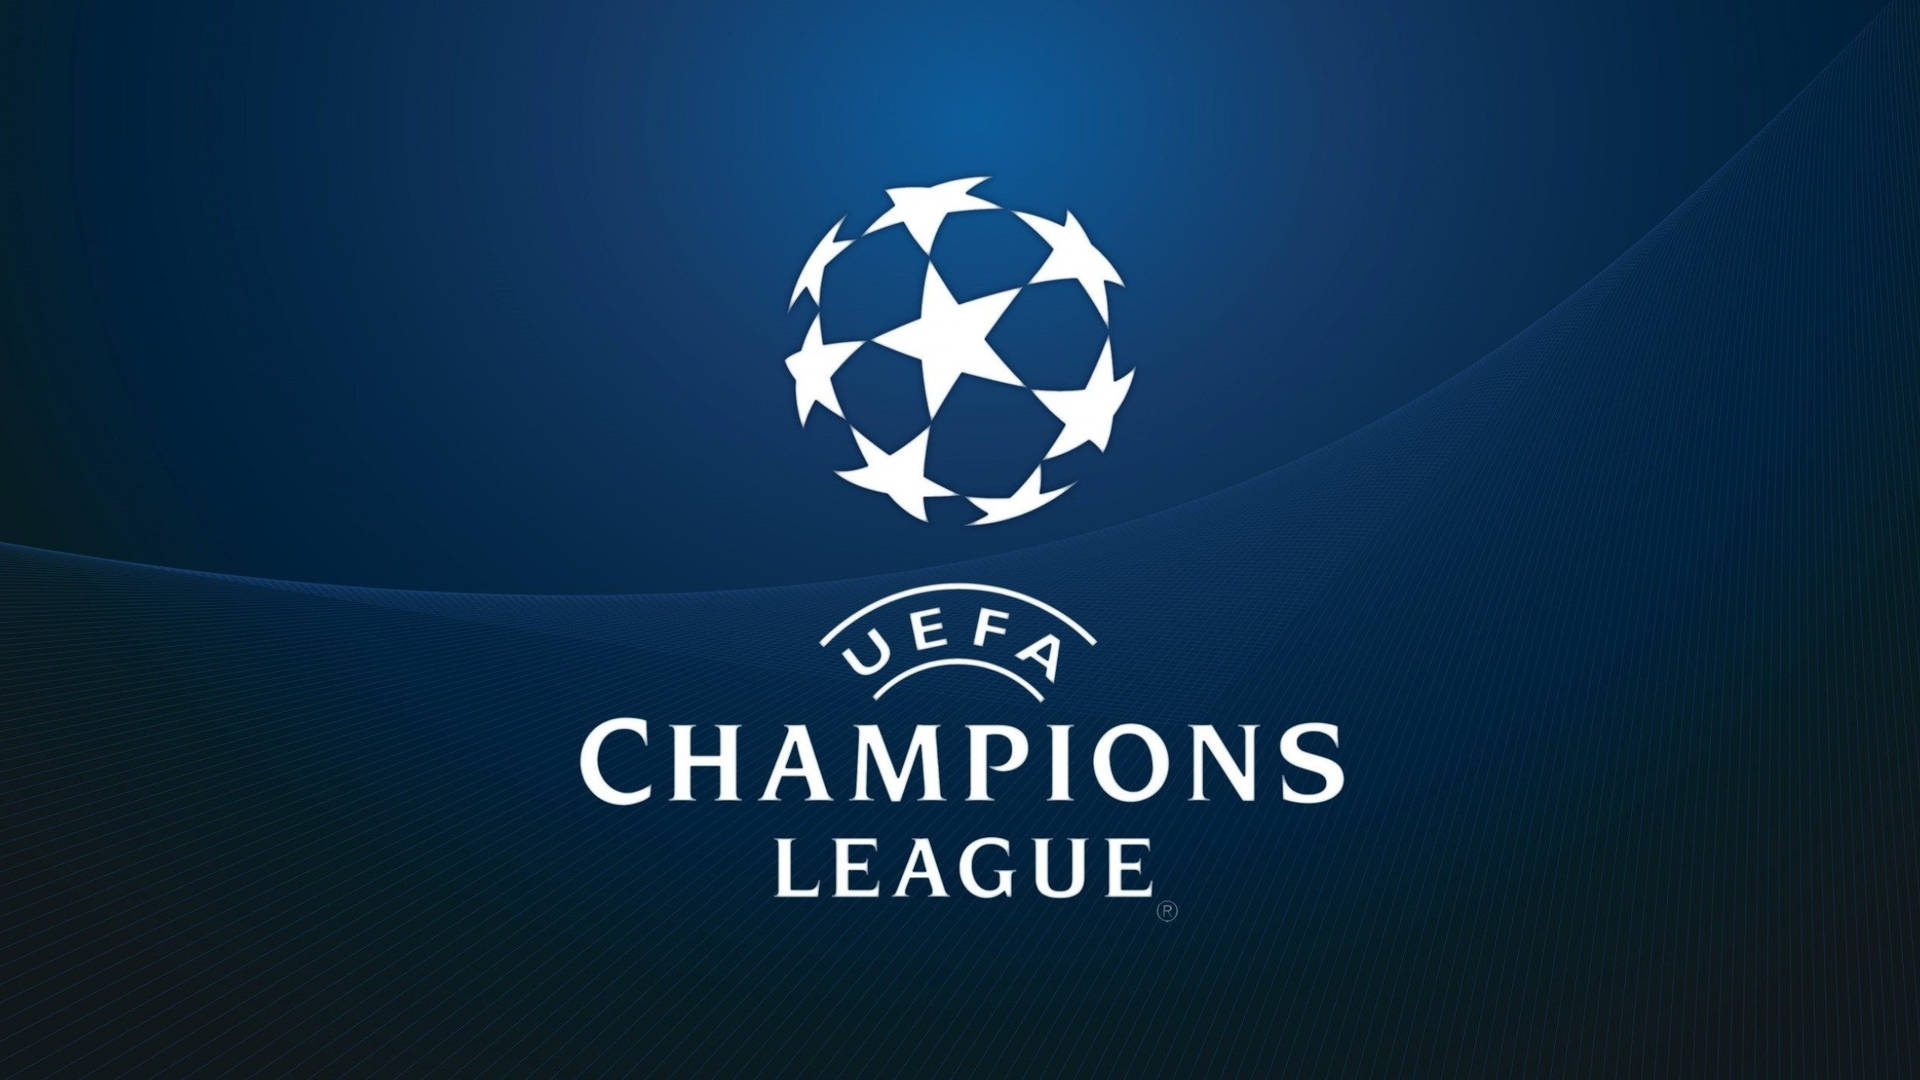 Classic Uefa Champions League Background